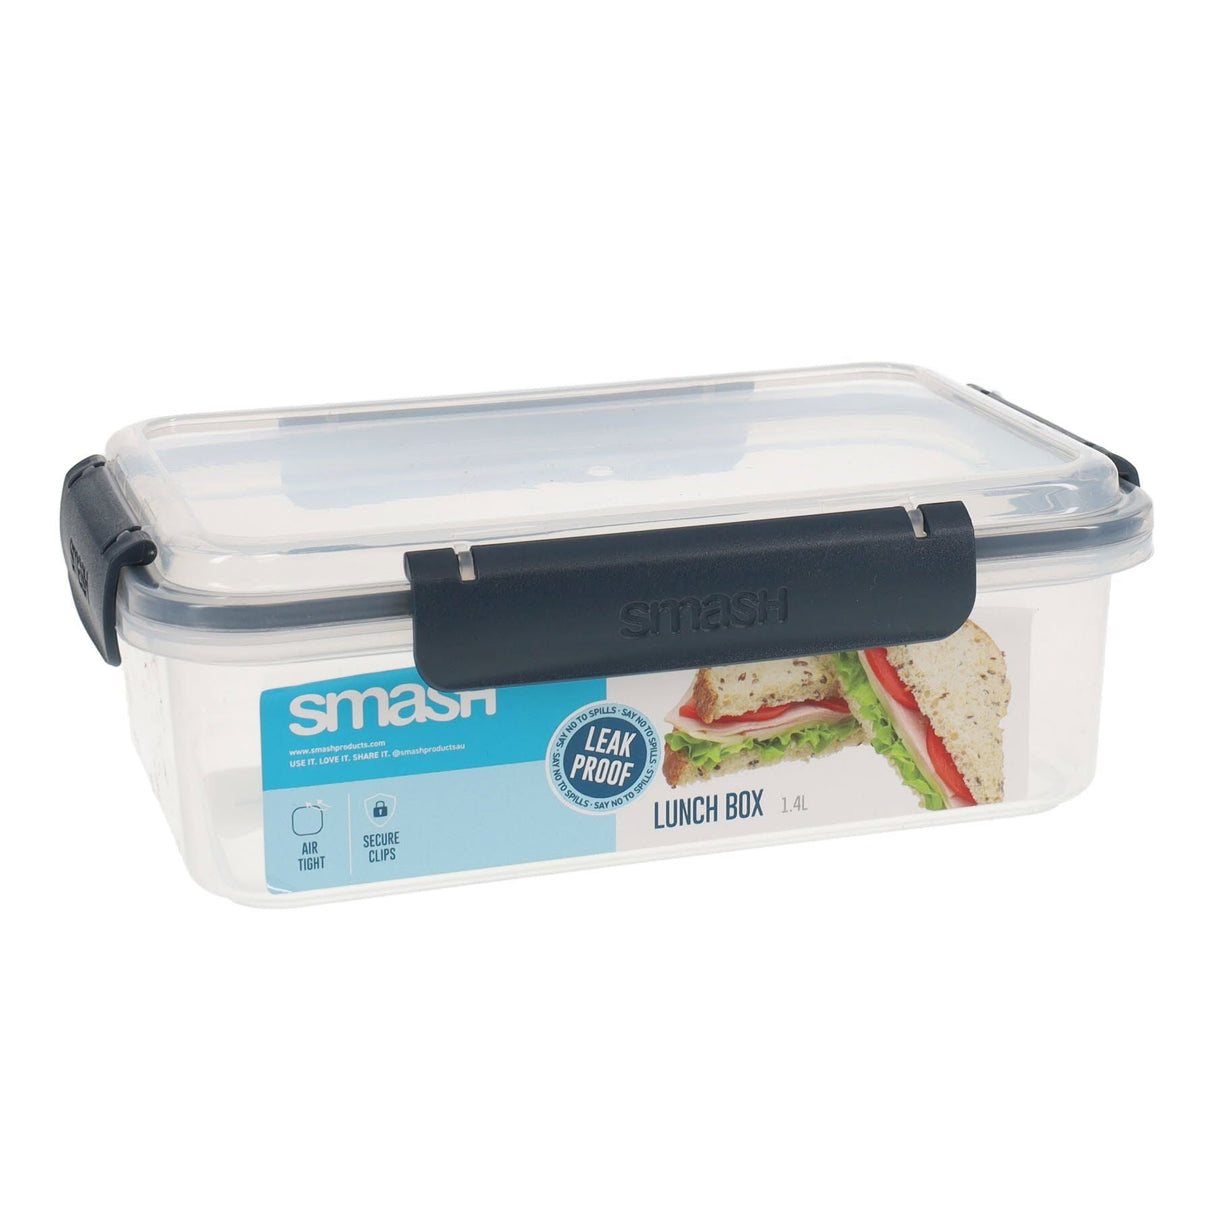 Smash Leakproof Lunch Box - 1.4lL - Black-Lunch Boxes-Smash|StationeryShop.co.uk